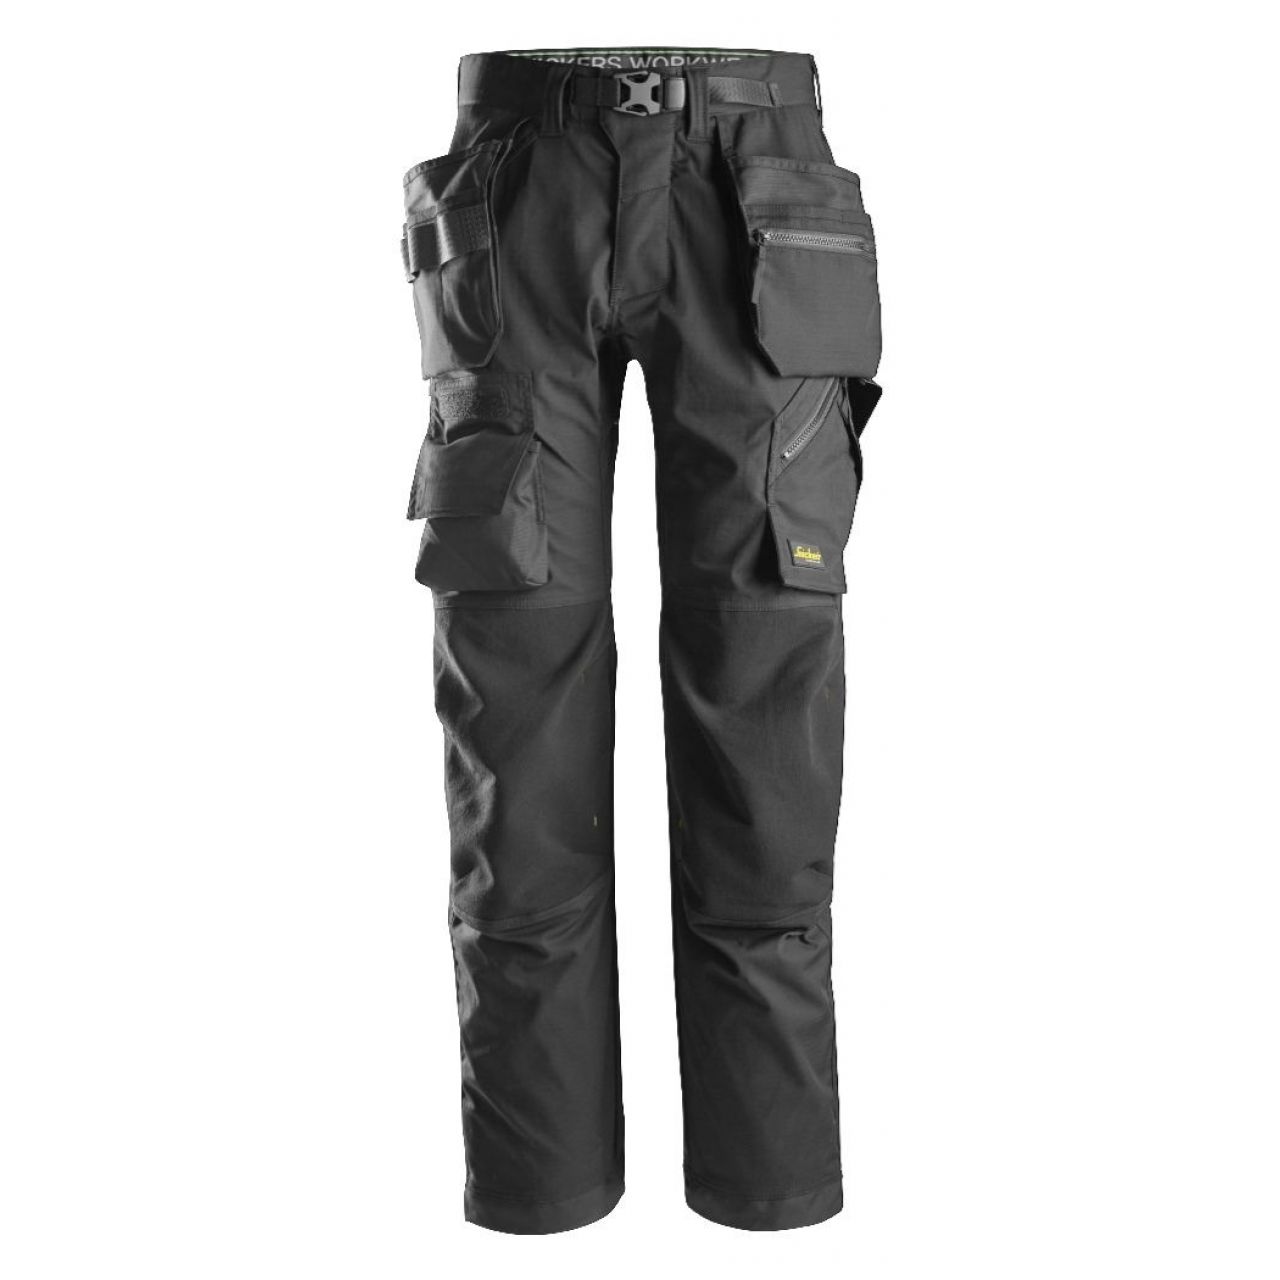 Pantalon solador FlexiWork+ bolsillos flotantes negro talla 062